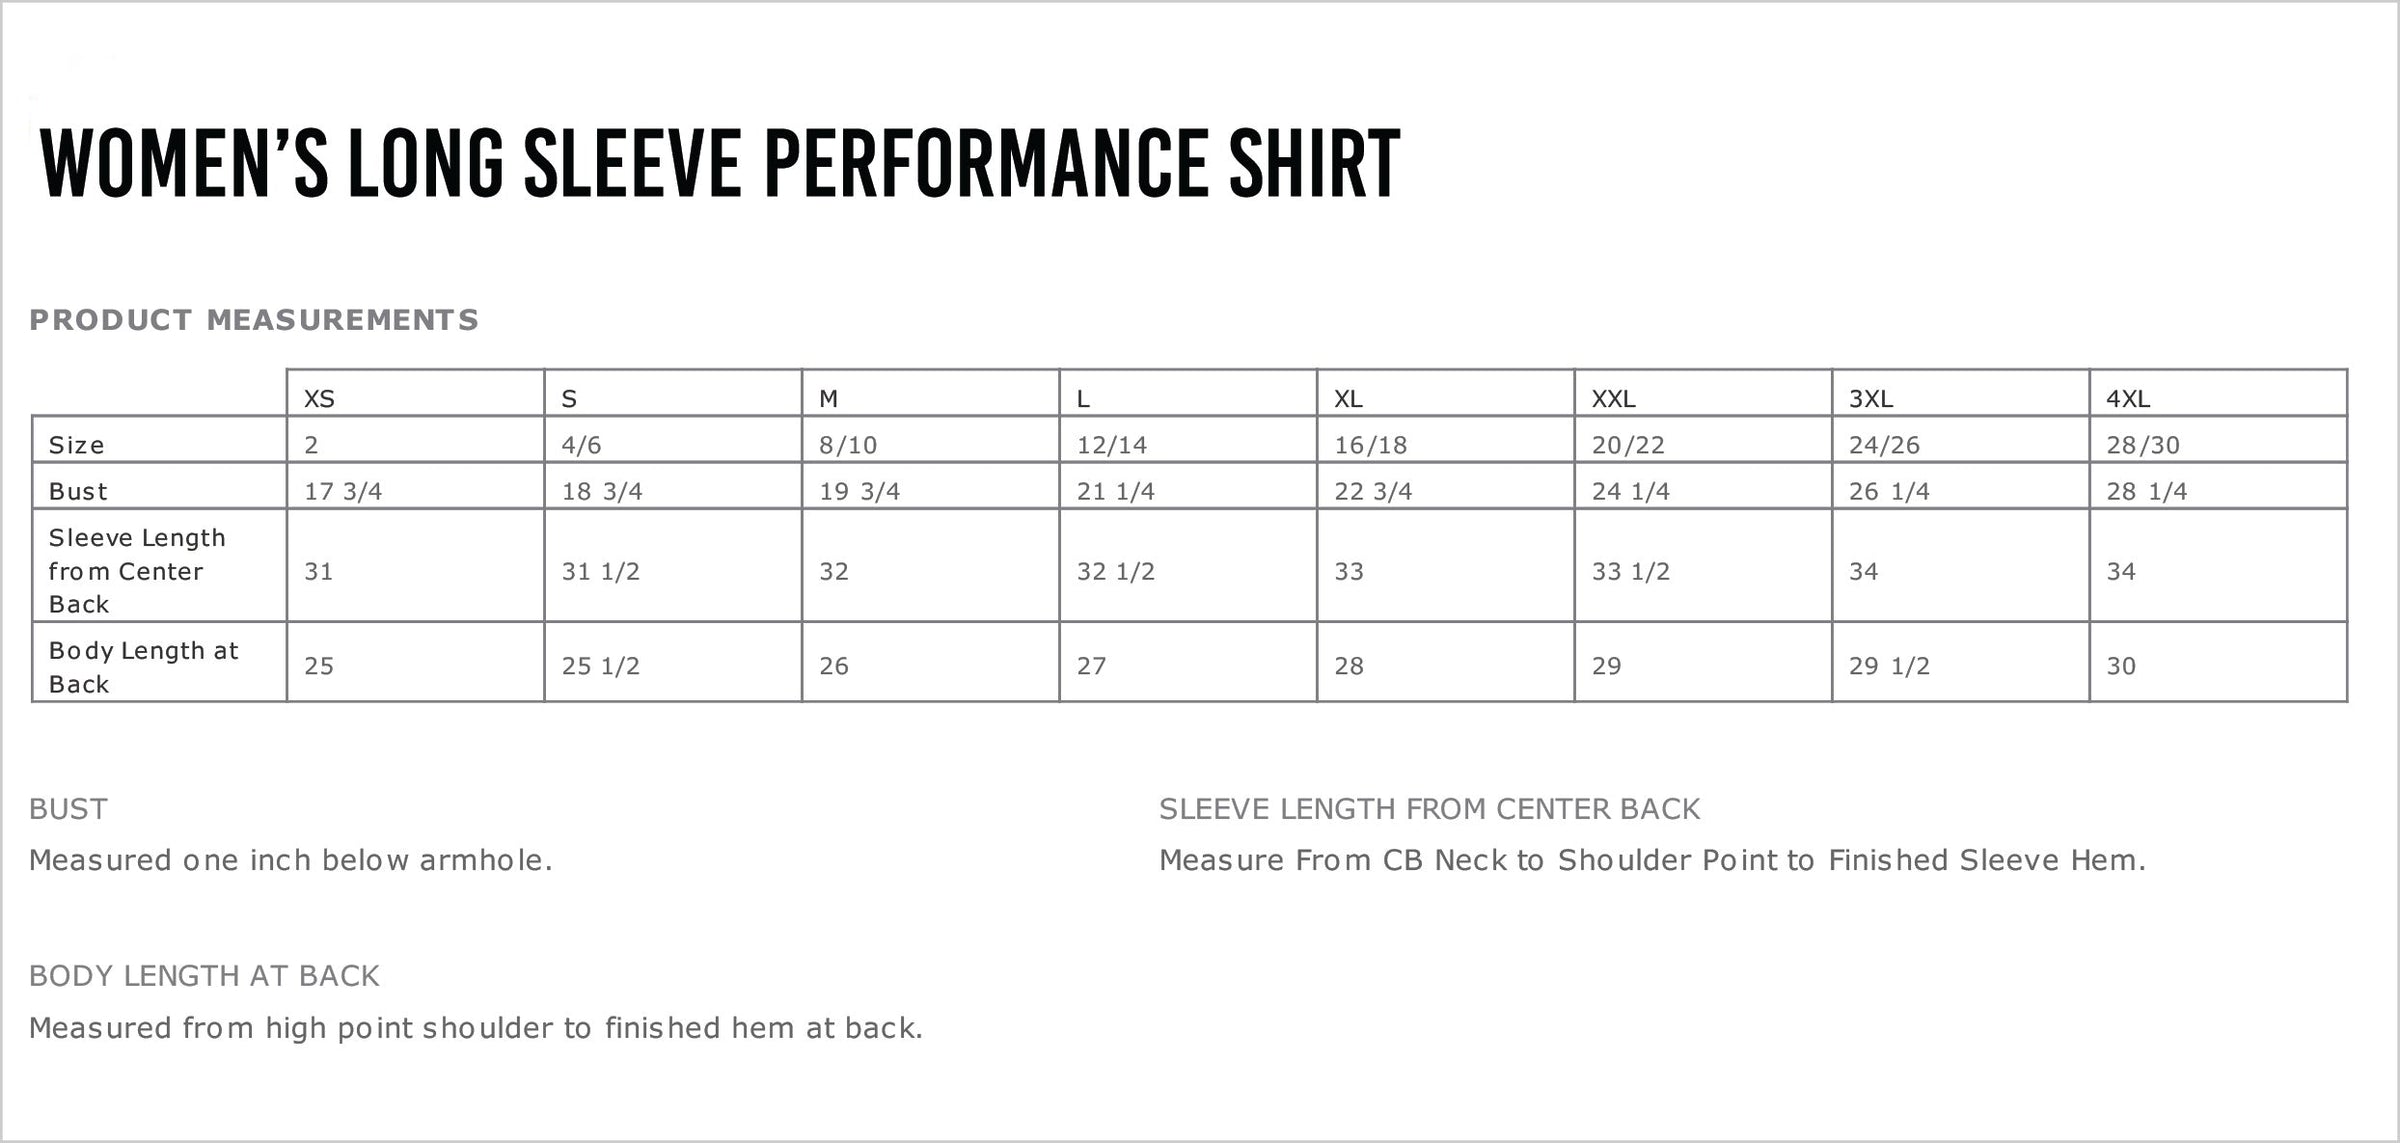 Hewlett Track & Field Performance T-Shirt – Blatant Team Store